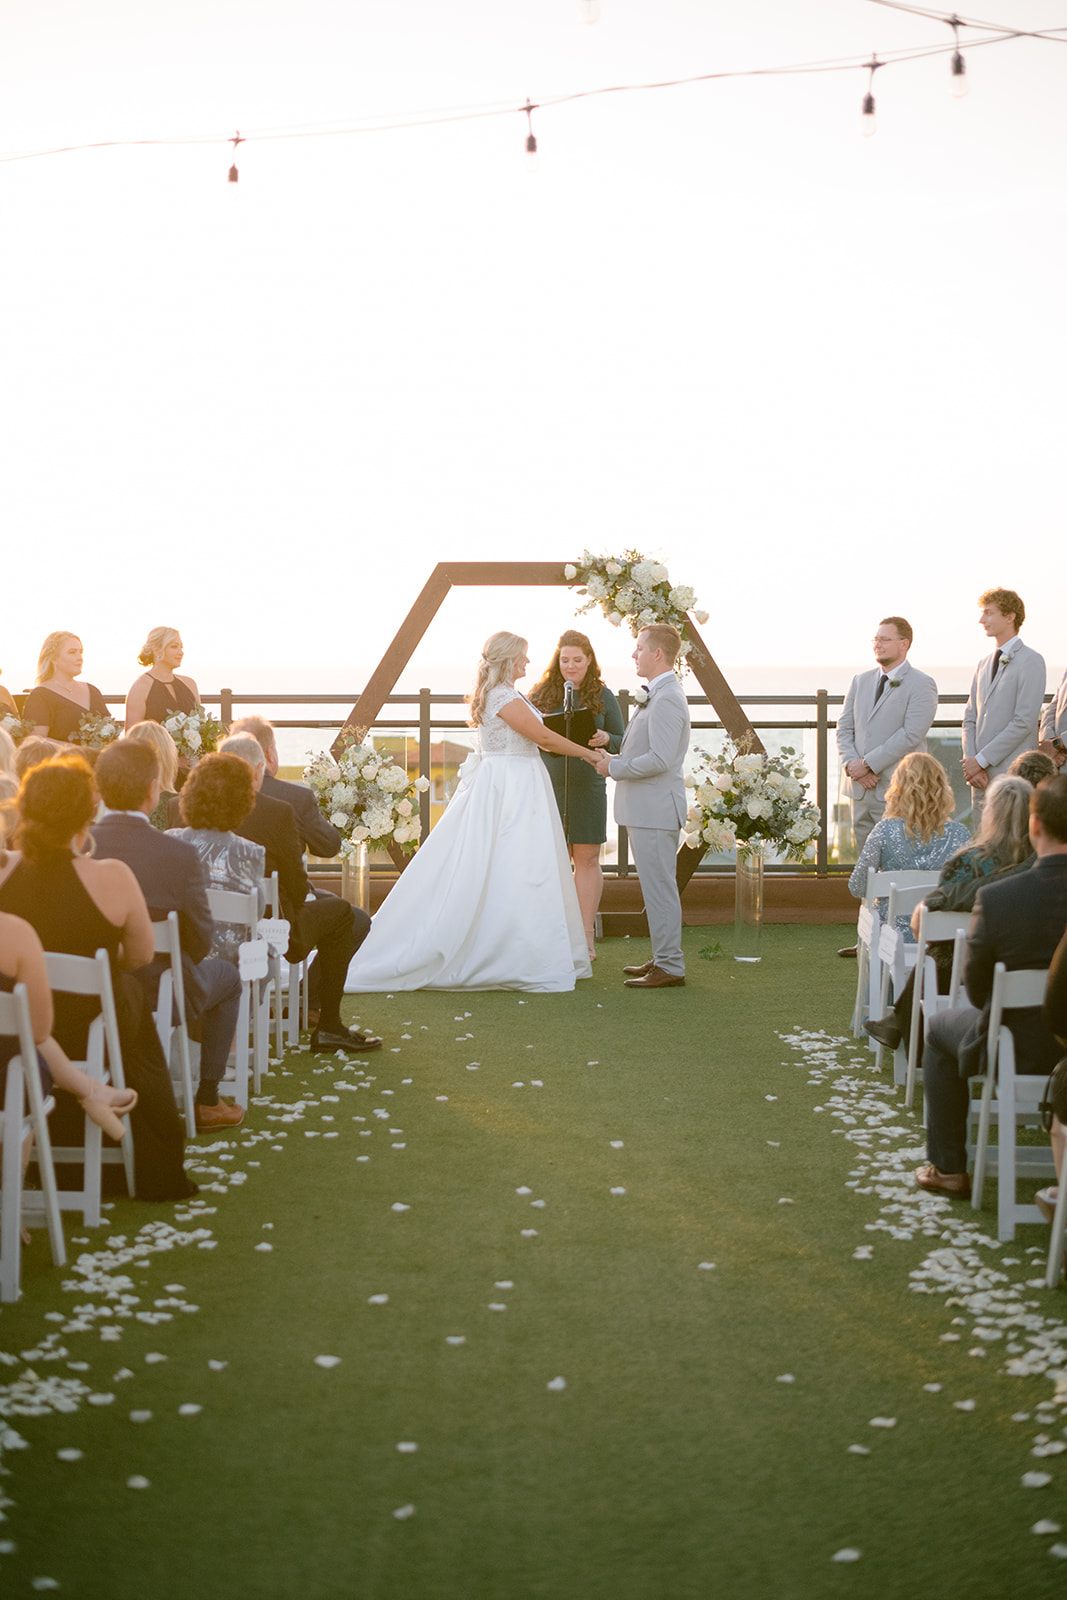 Hotel Zamora Wedding Ceremony: Stunning Ocean View Backdrop
